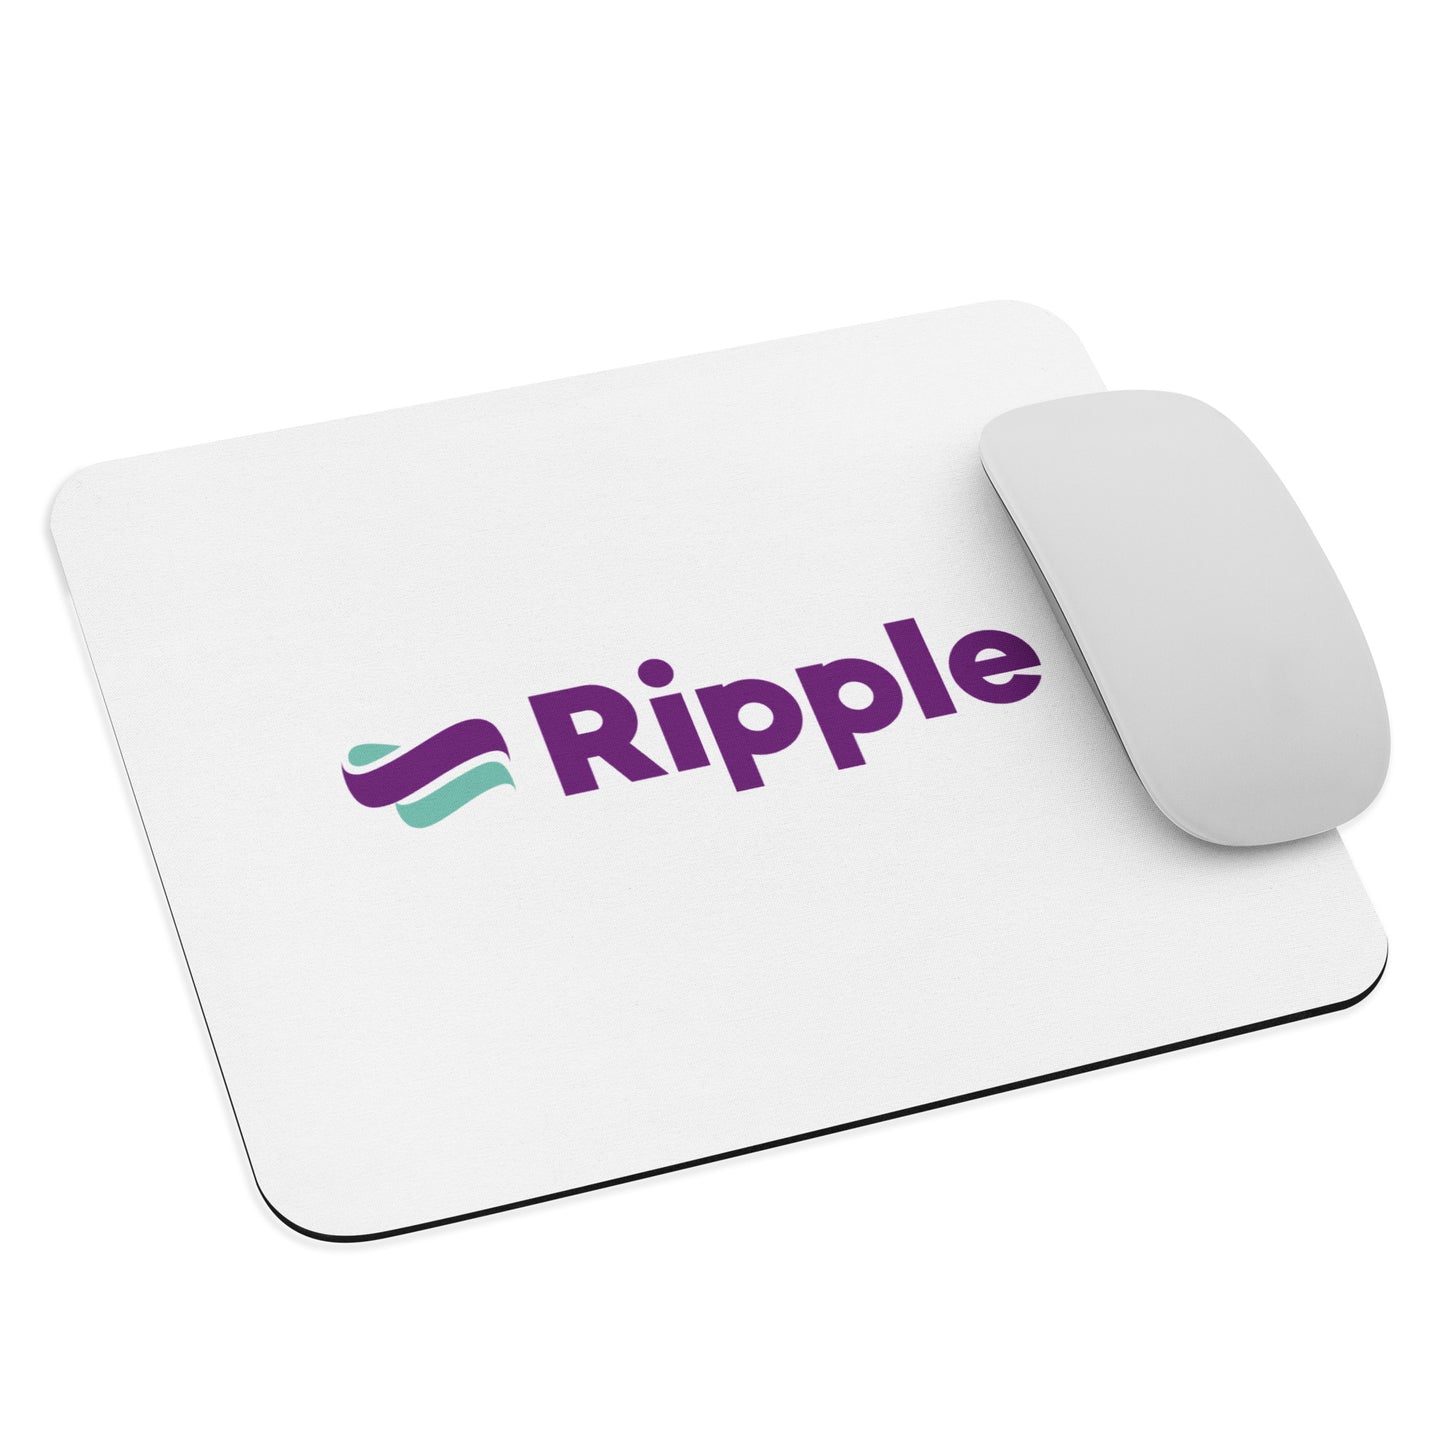 Ripple mouse pad